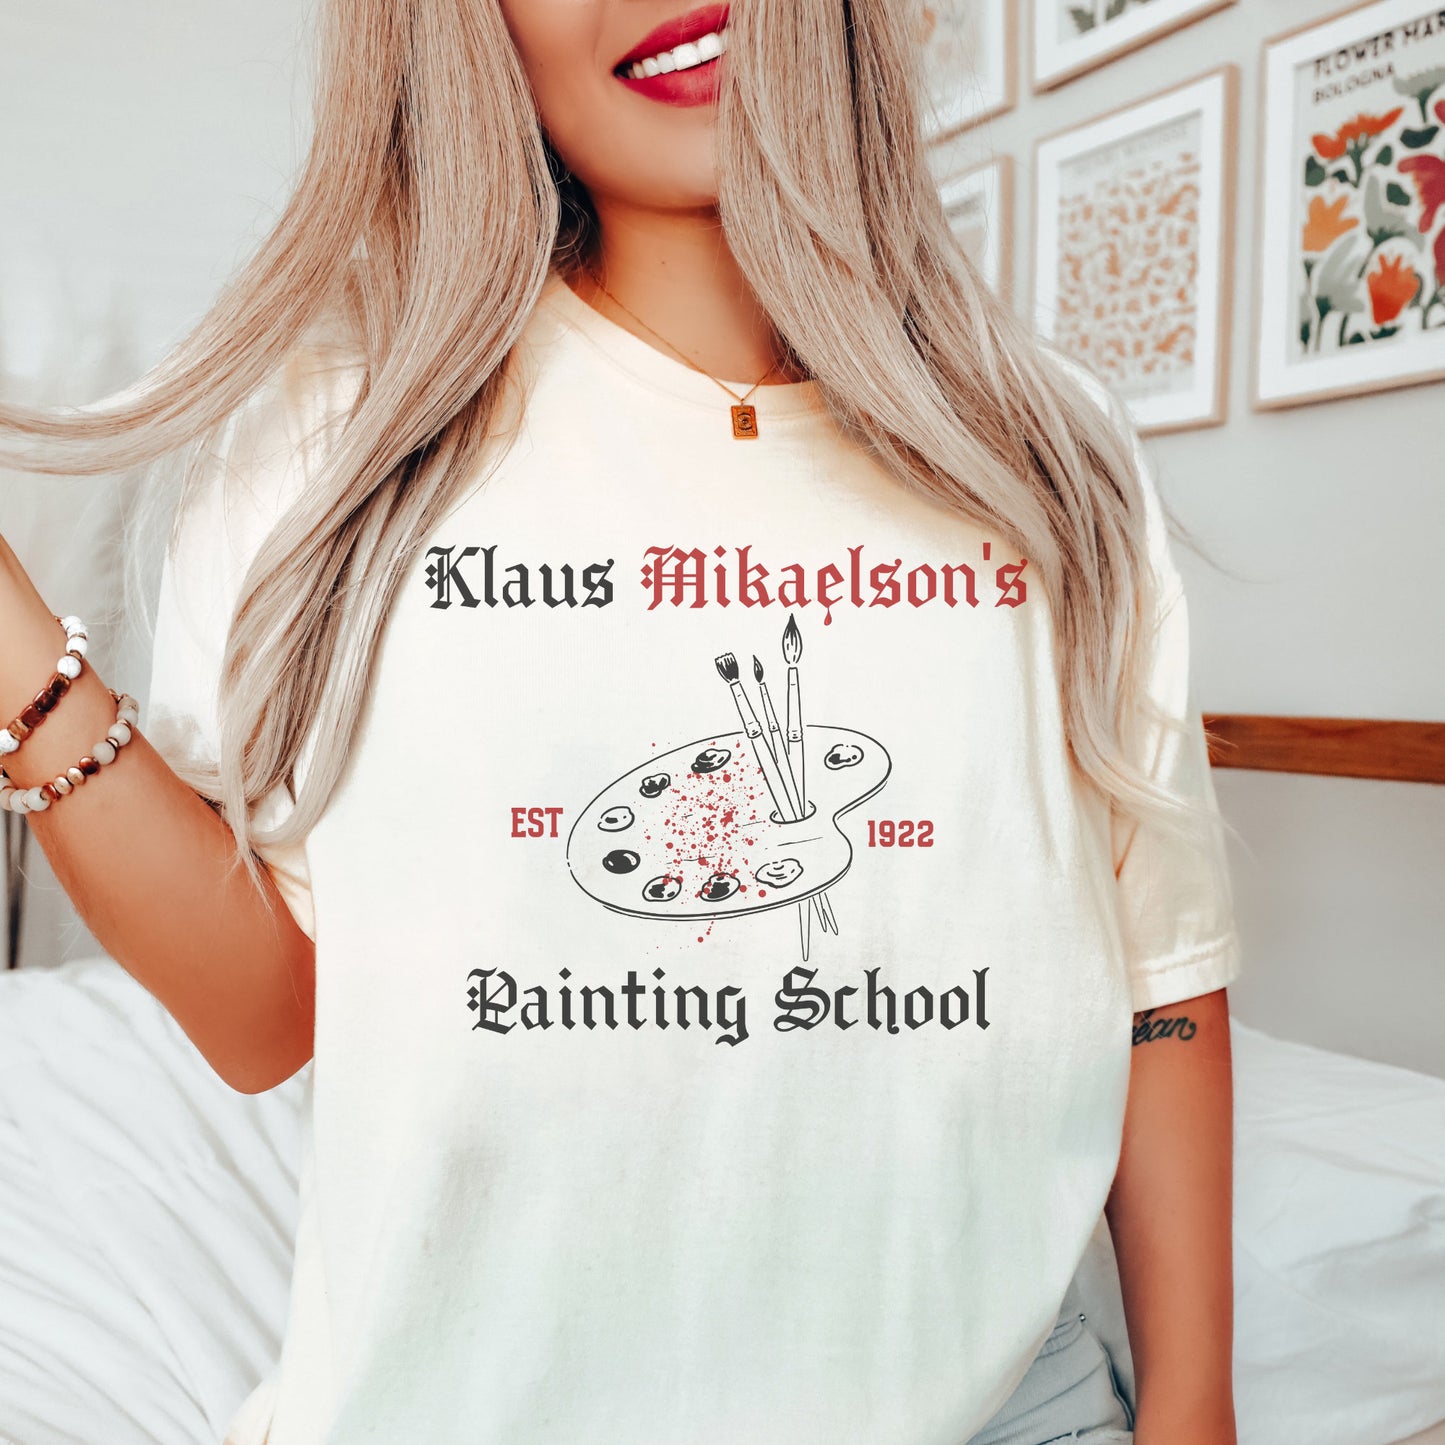 Klaus Mikaleson Shirt, TVD shirt, Klaus Merch, The Originals, TVD merch, Tvd gift, Damon Salvatore, Stefan Salvatore